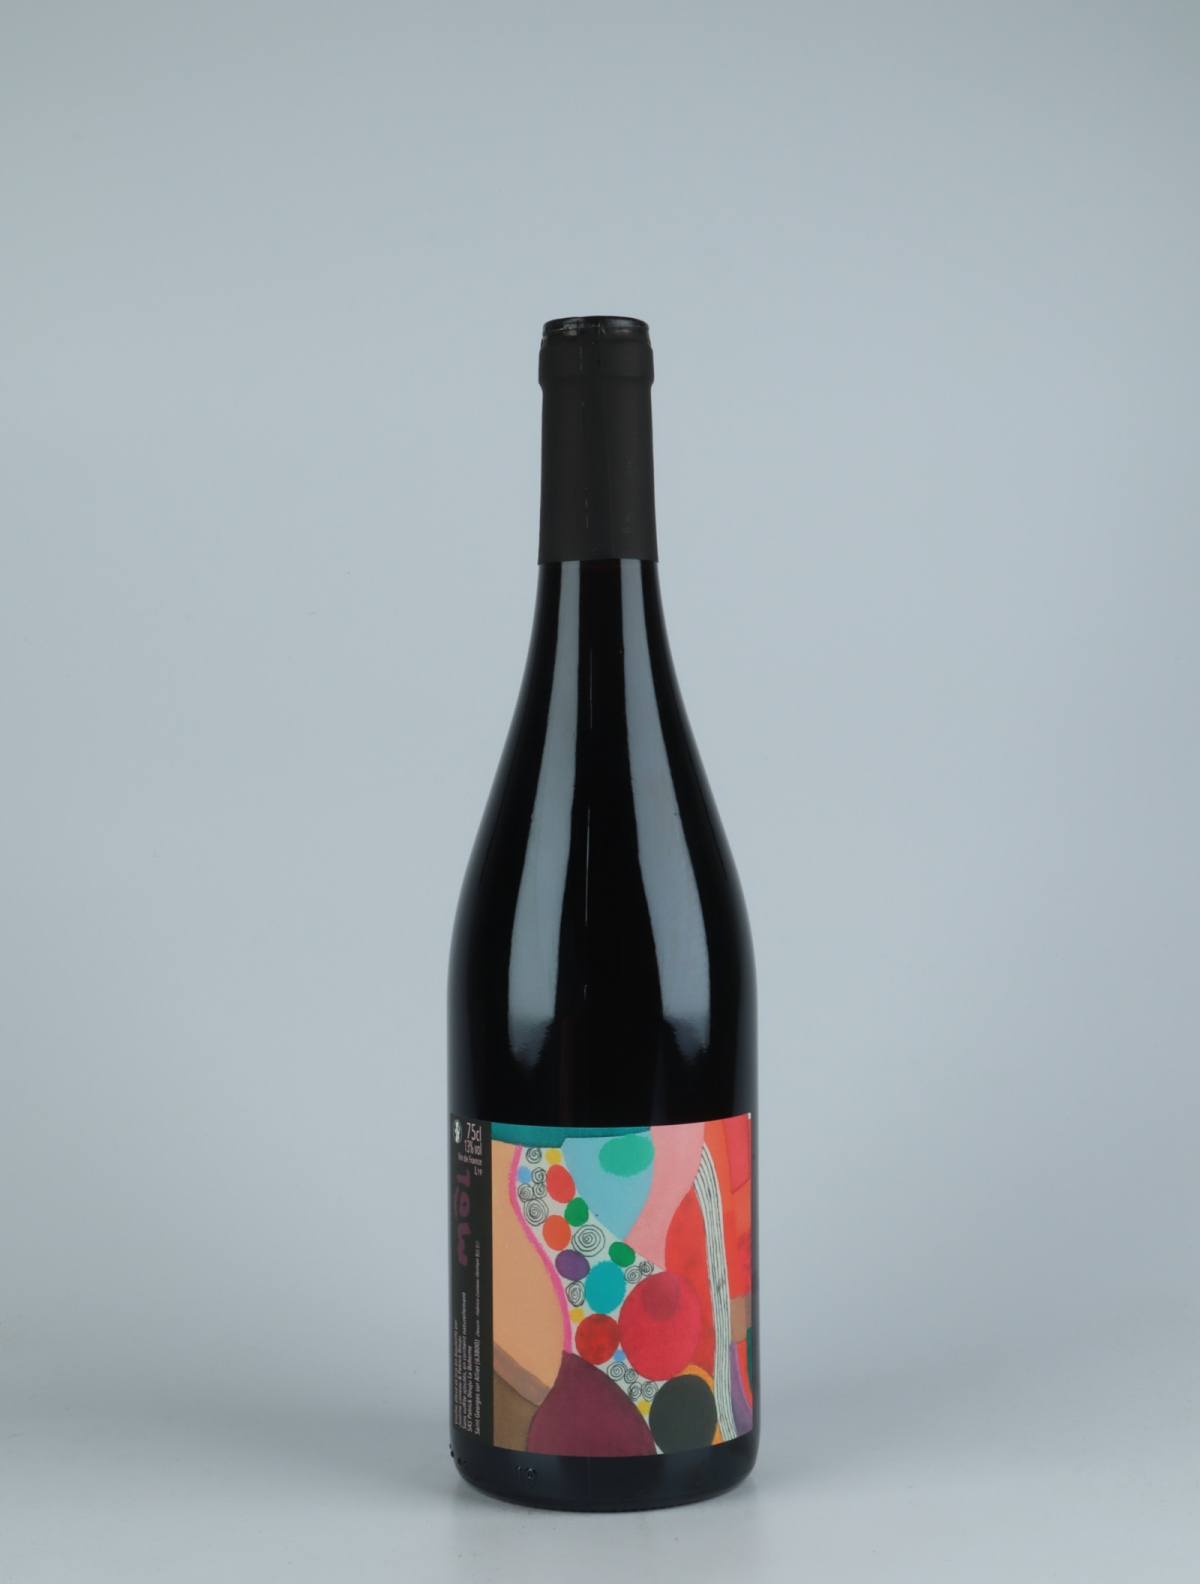 A bottle 2019 Môl Red wine from Patrick Bouju, Auvergne in France